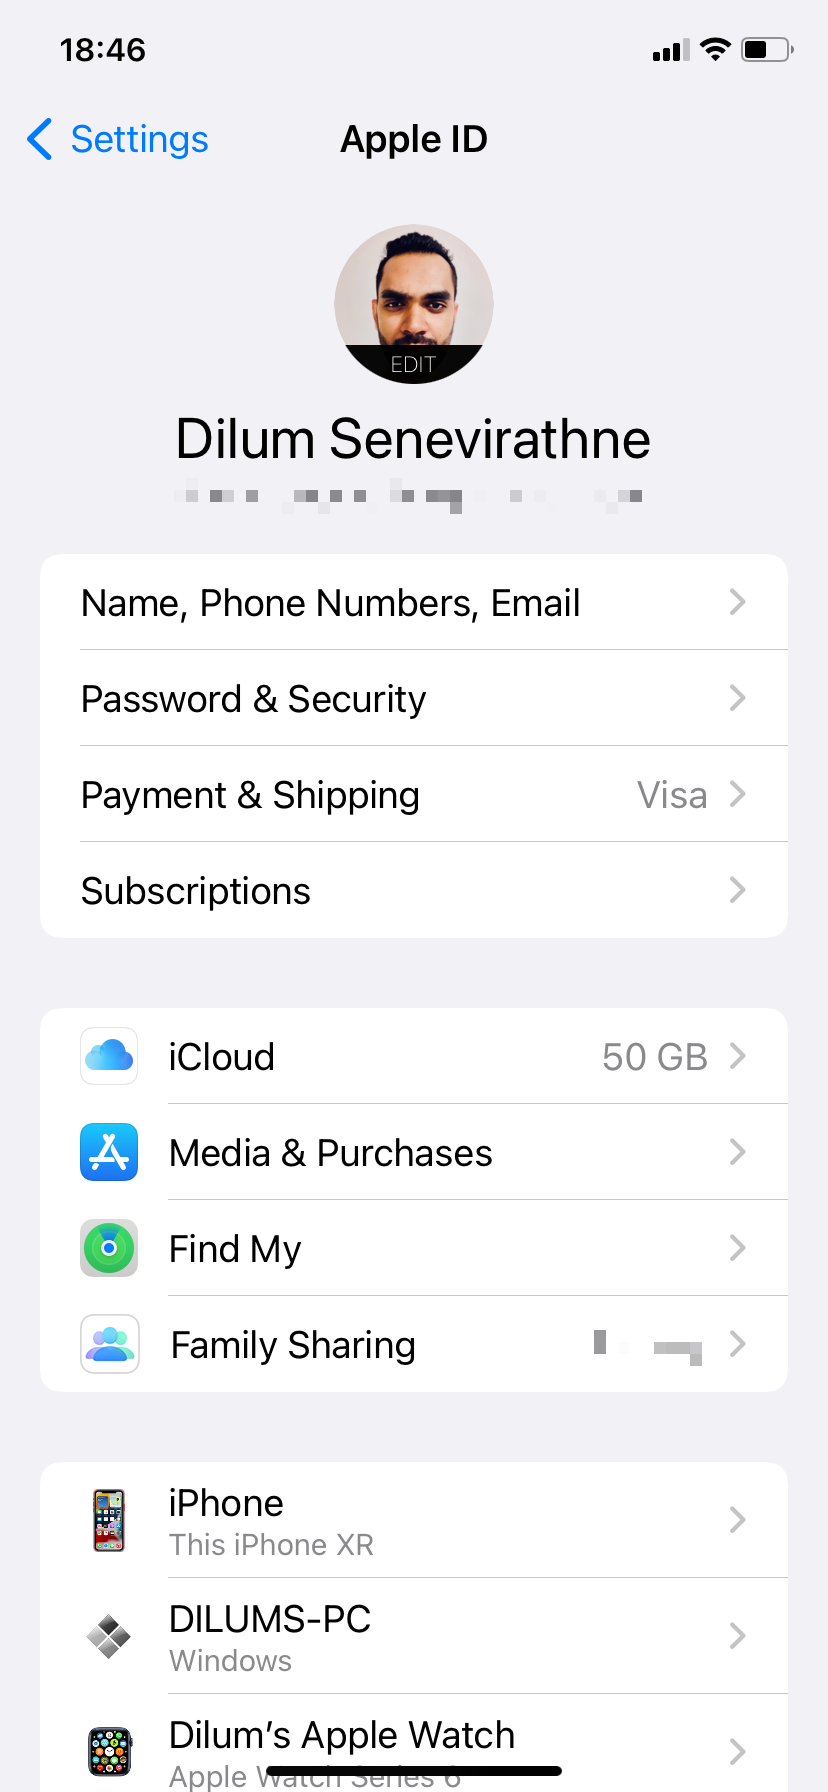 Apple ID settings screen.